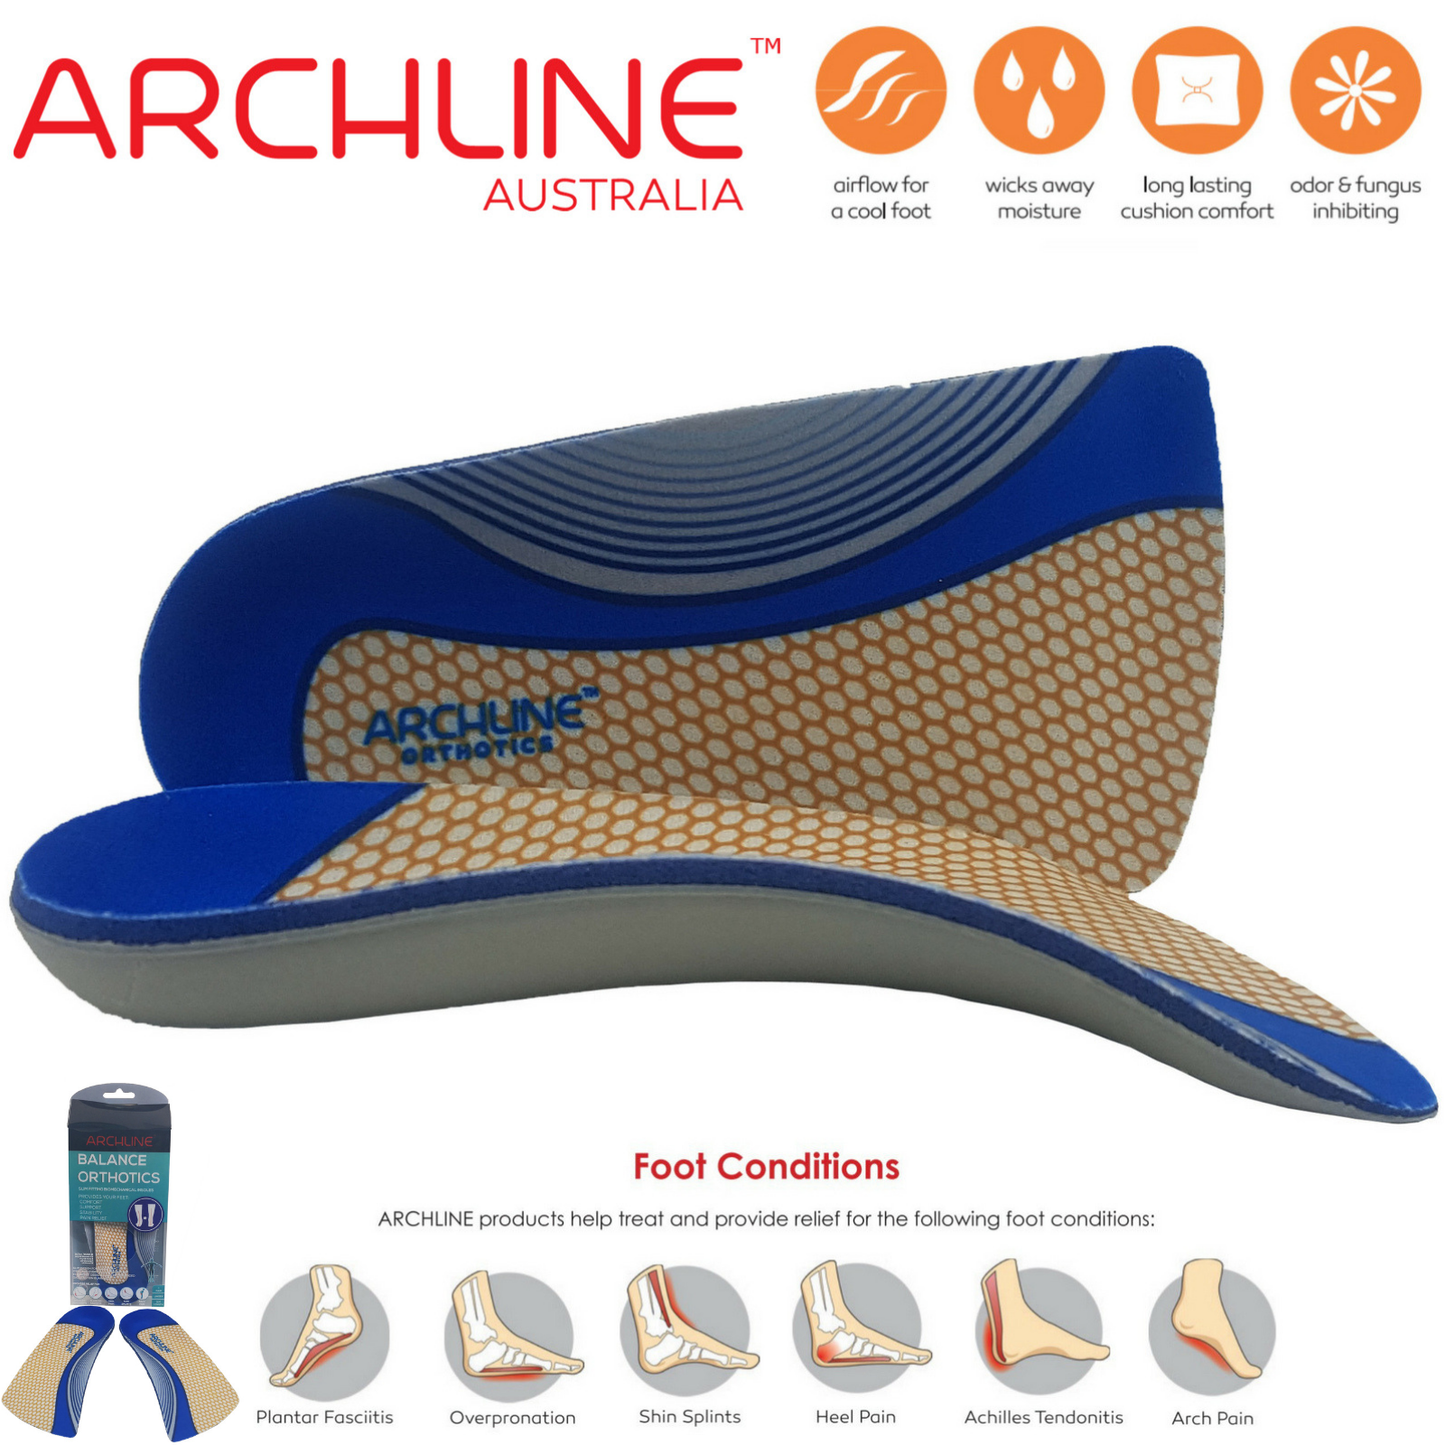 ARCHLINE 3/4 Slim Orthotics Plantar Fasciitis Insoles Balance Support Relief - EUR 39